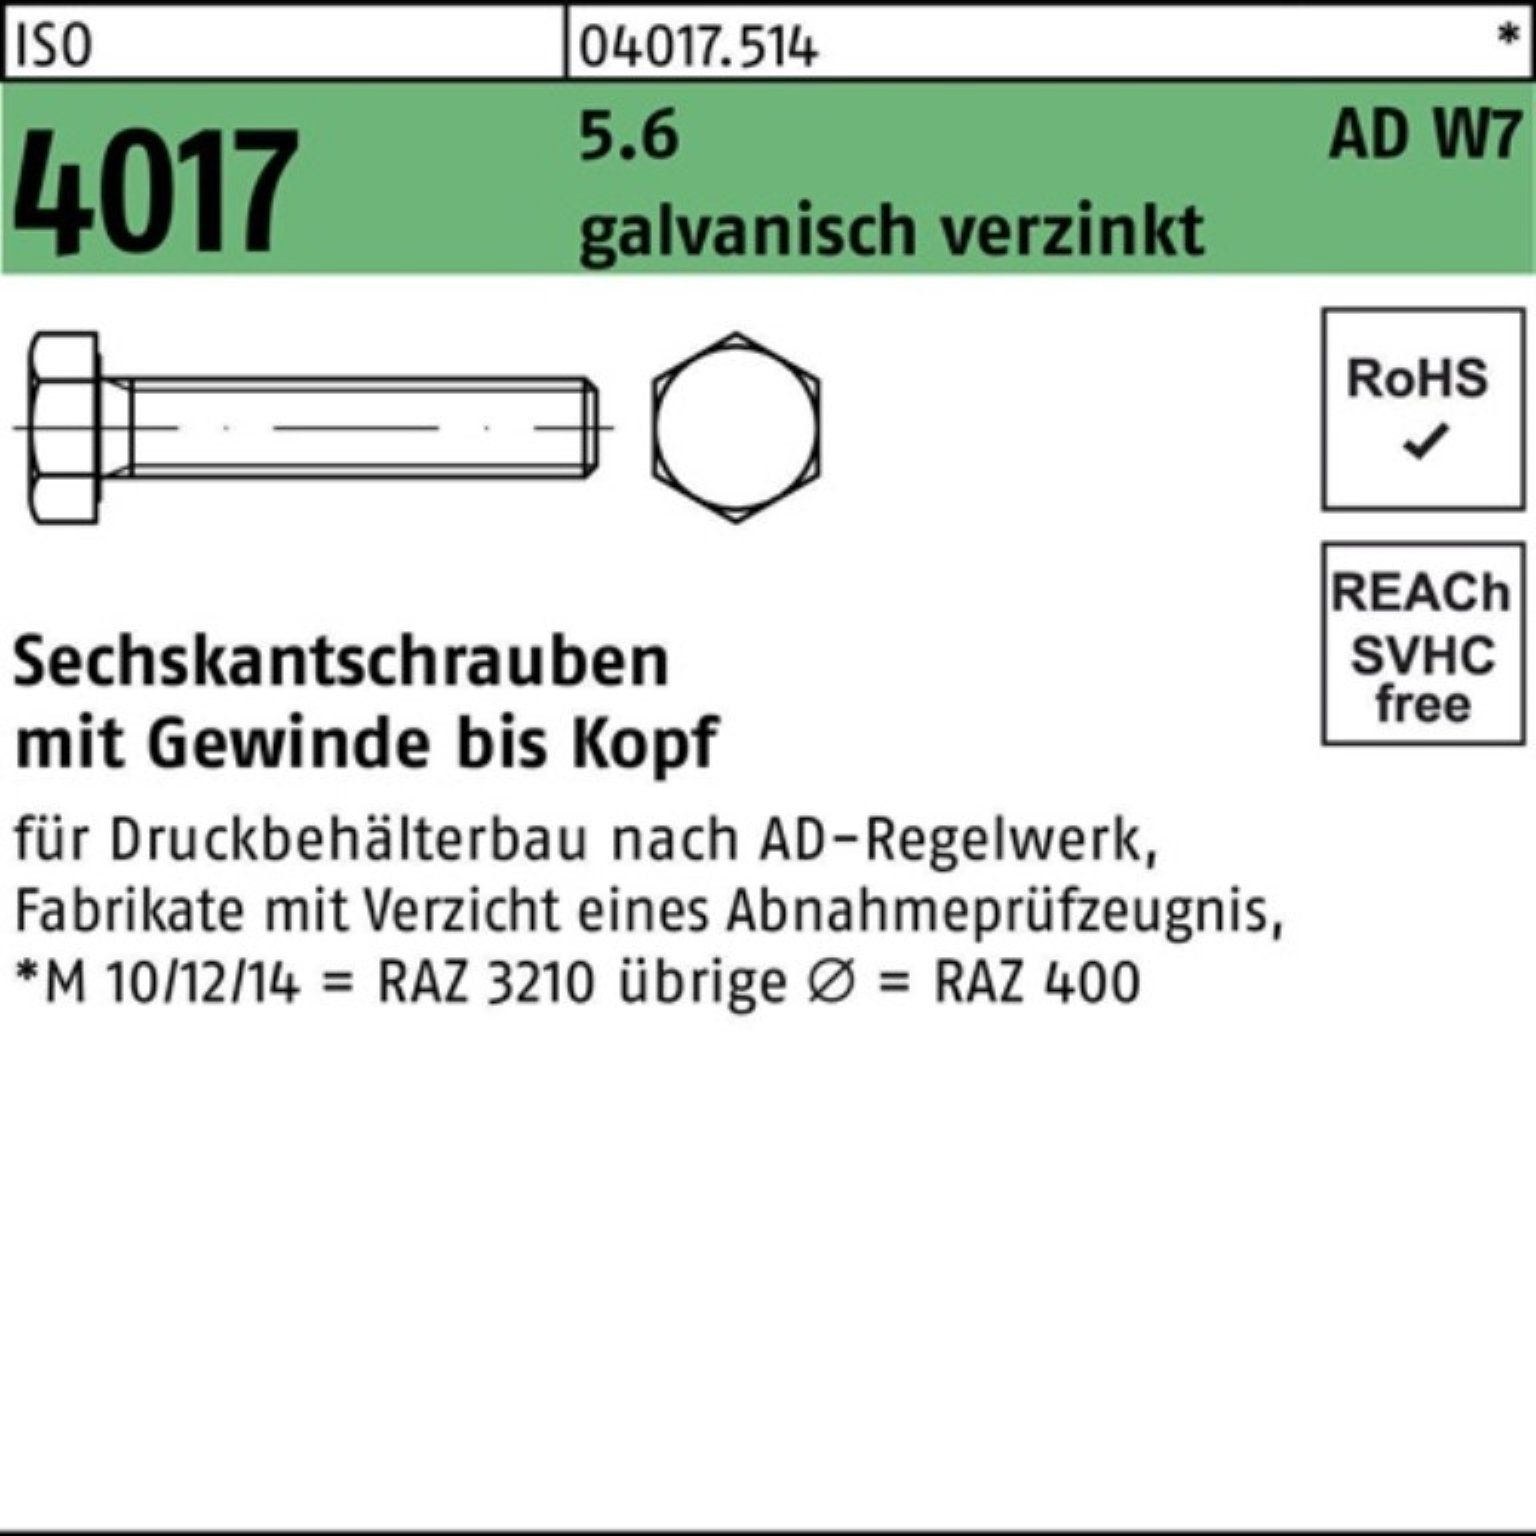 Sechskantschraube VG 30 Sechskantschraube 2 W7 200er 4017 5.6 M8x AD ISO galv.verz. Pack Bufab